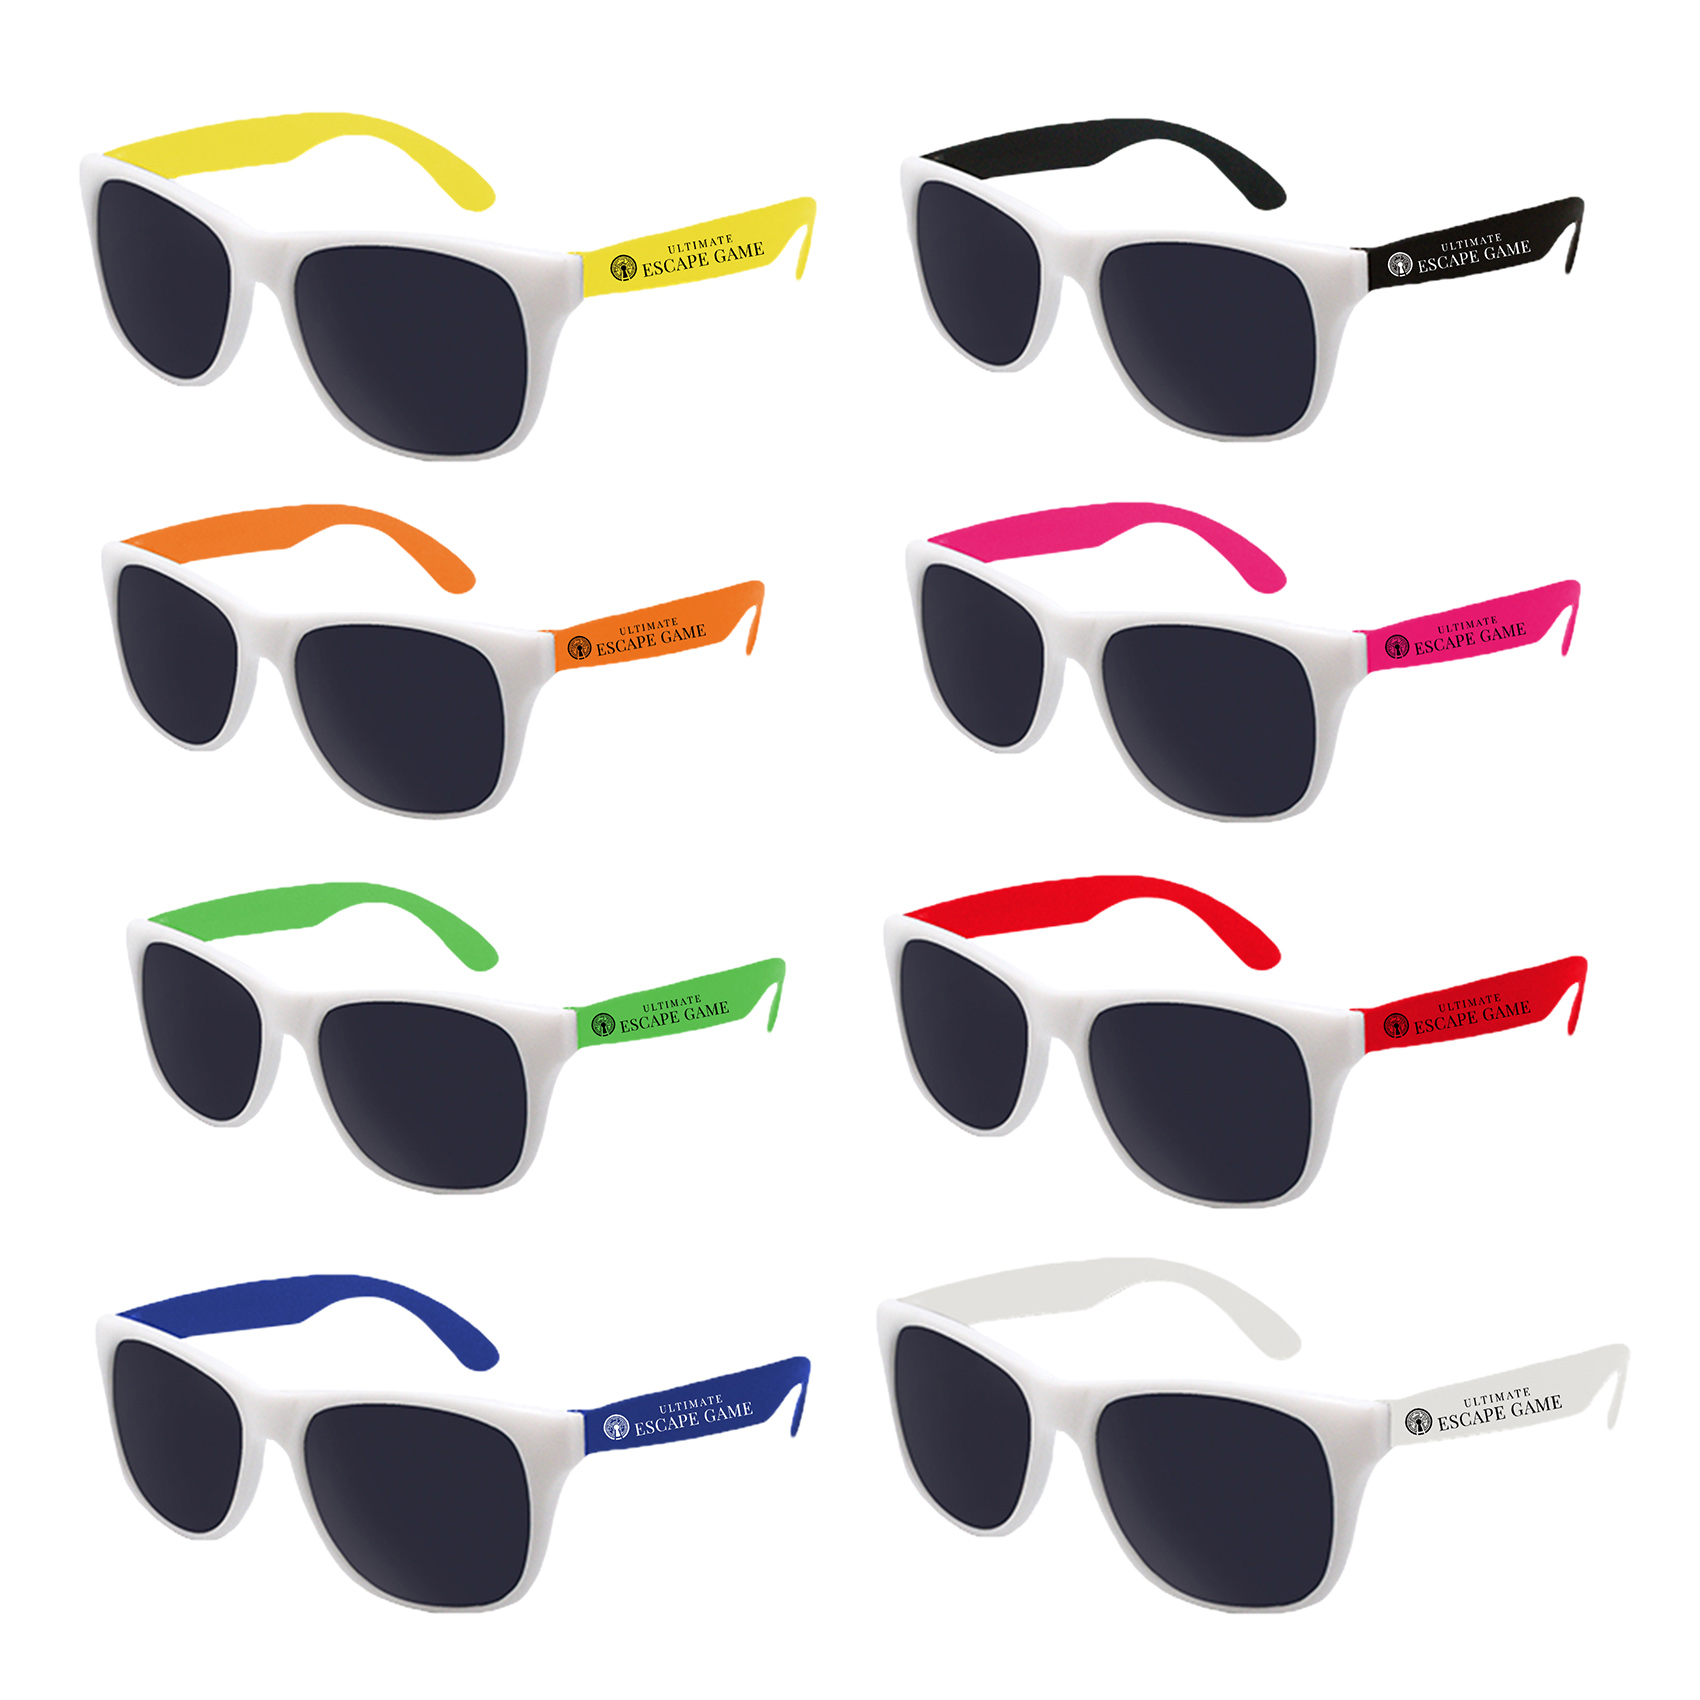 White Trim Sunglasses